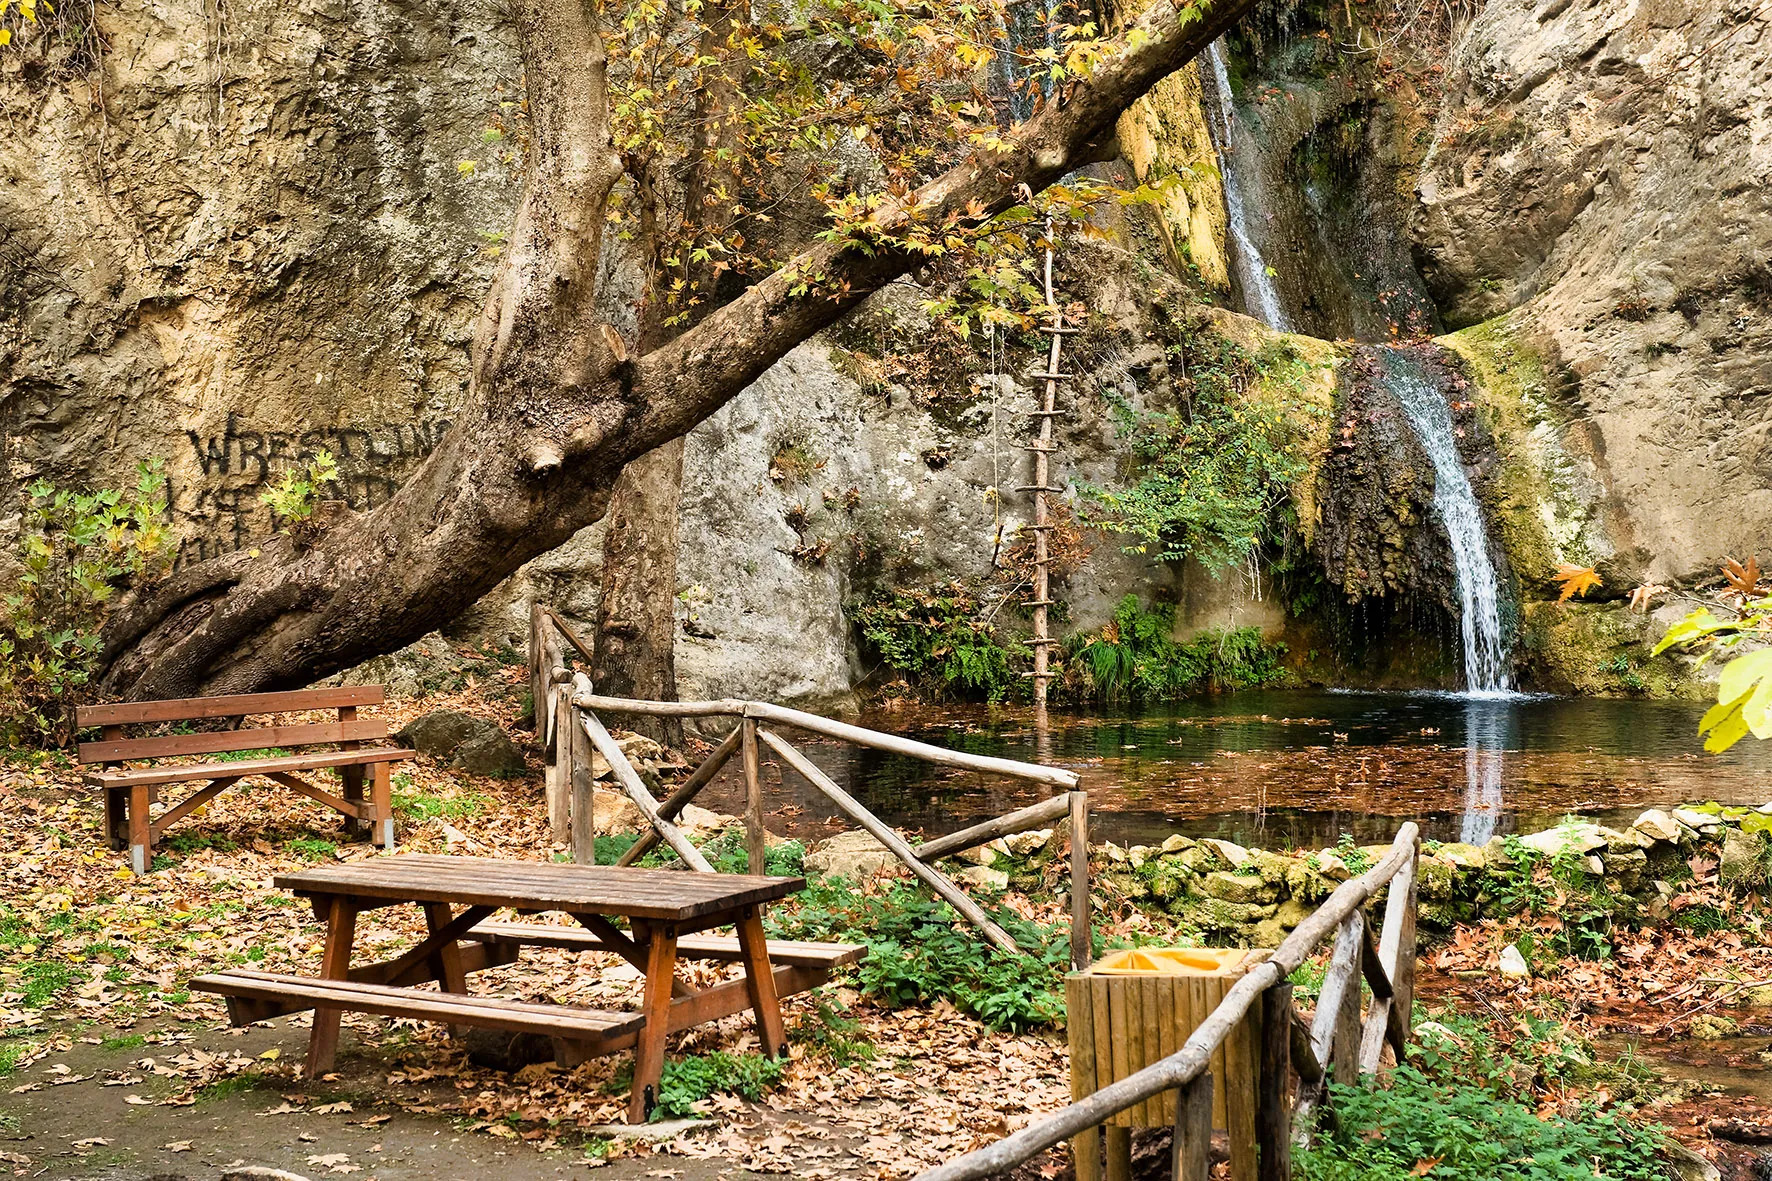 Palea Kavala trail: A gorgeous set of waterfalls nestled among perennial plane trees